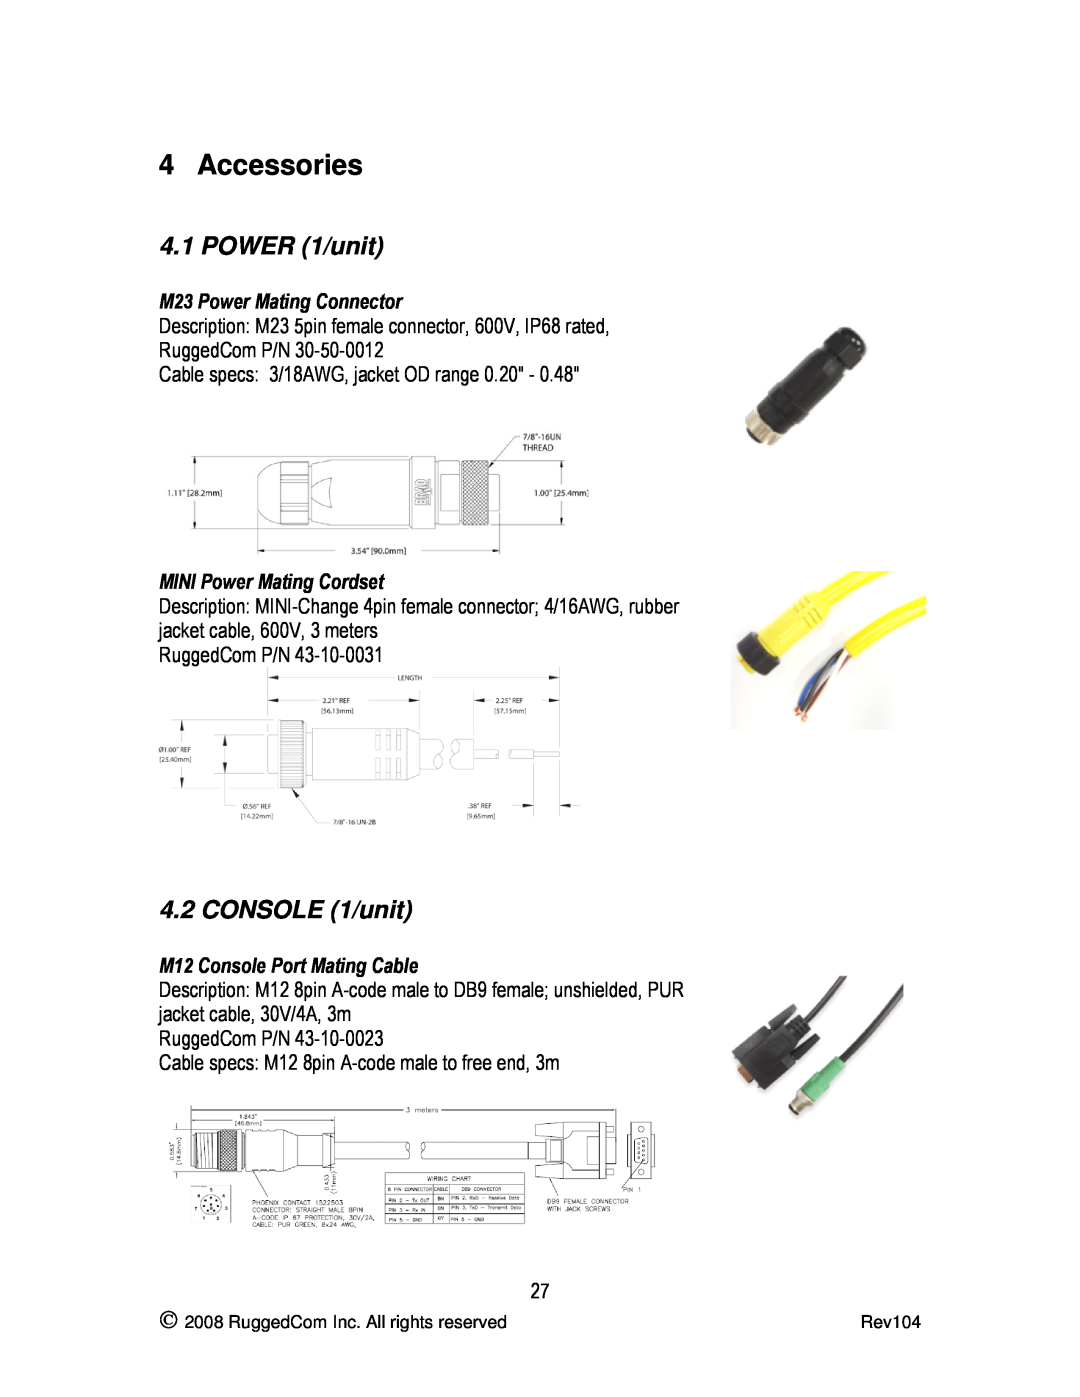 RuggedCom RS969 manual Accessories, POWER 1/unit, CONSOLE 1/unit 